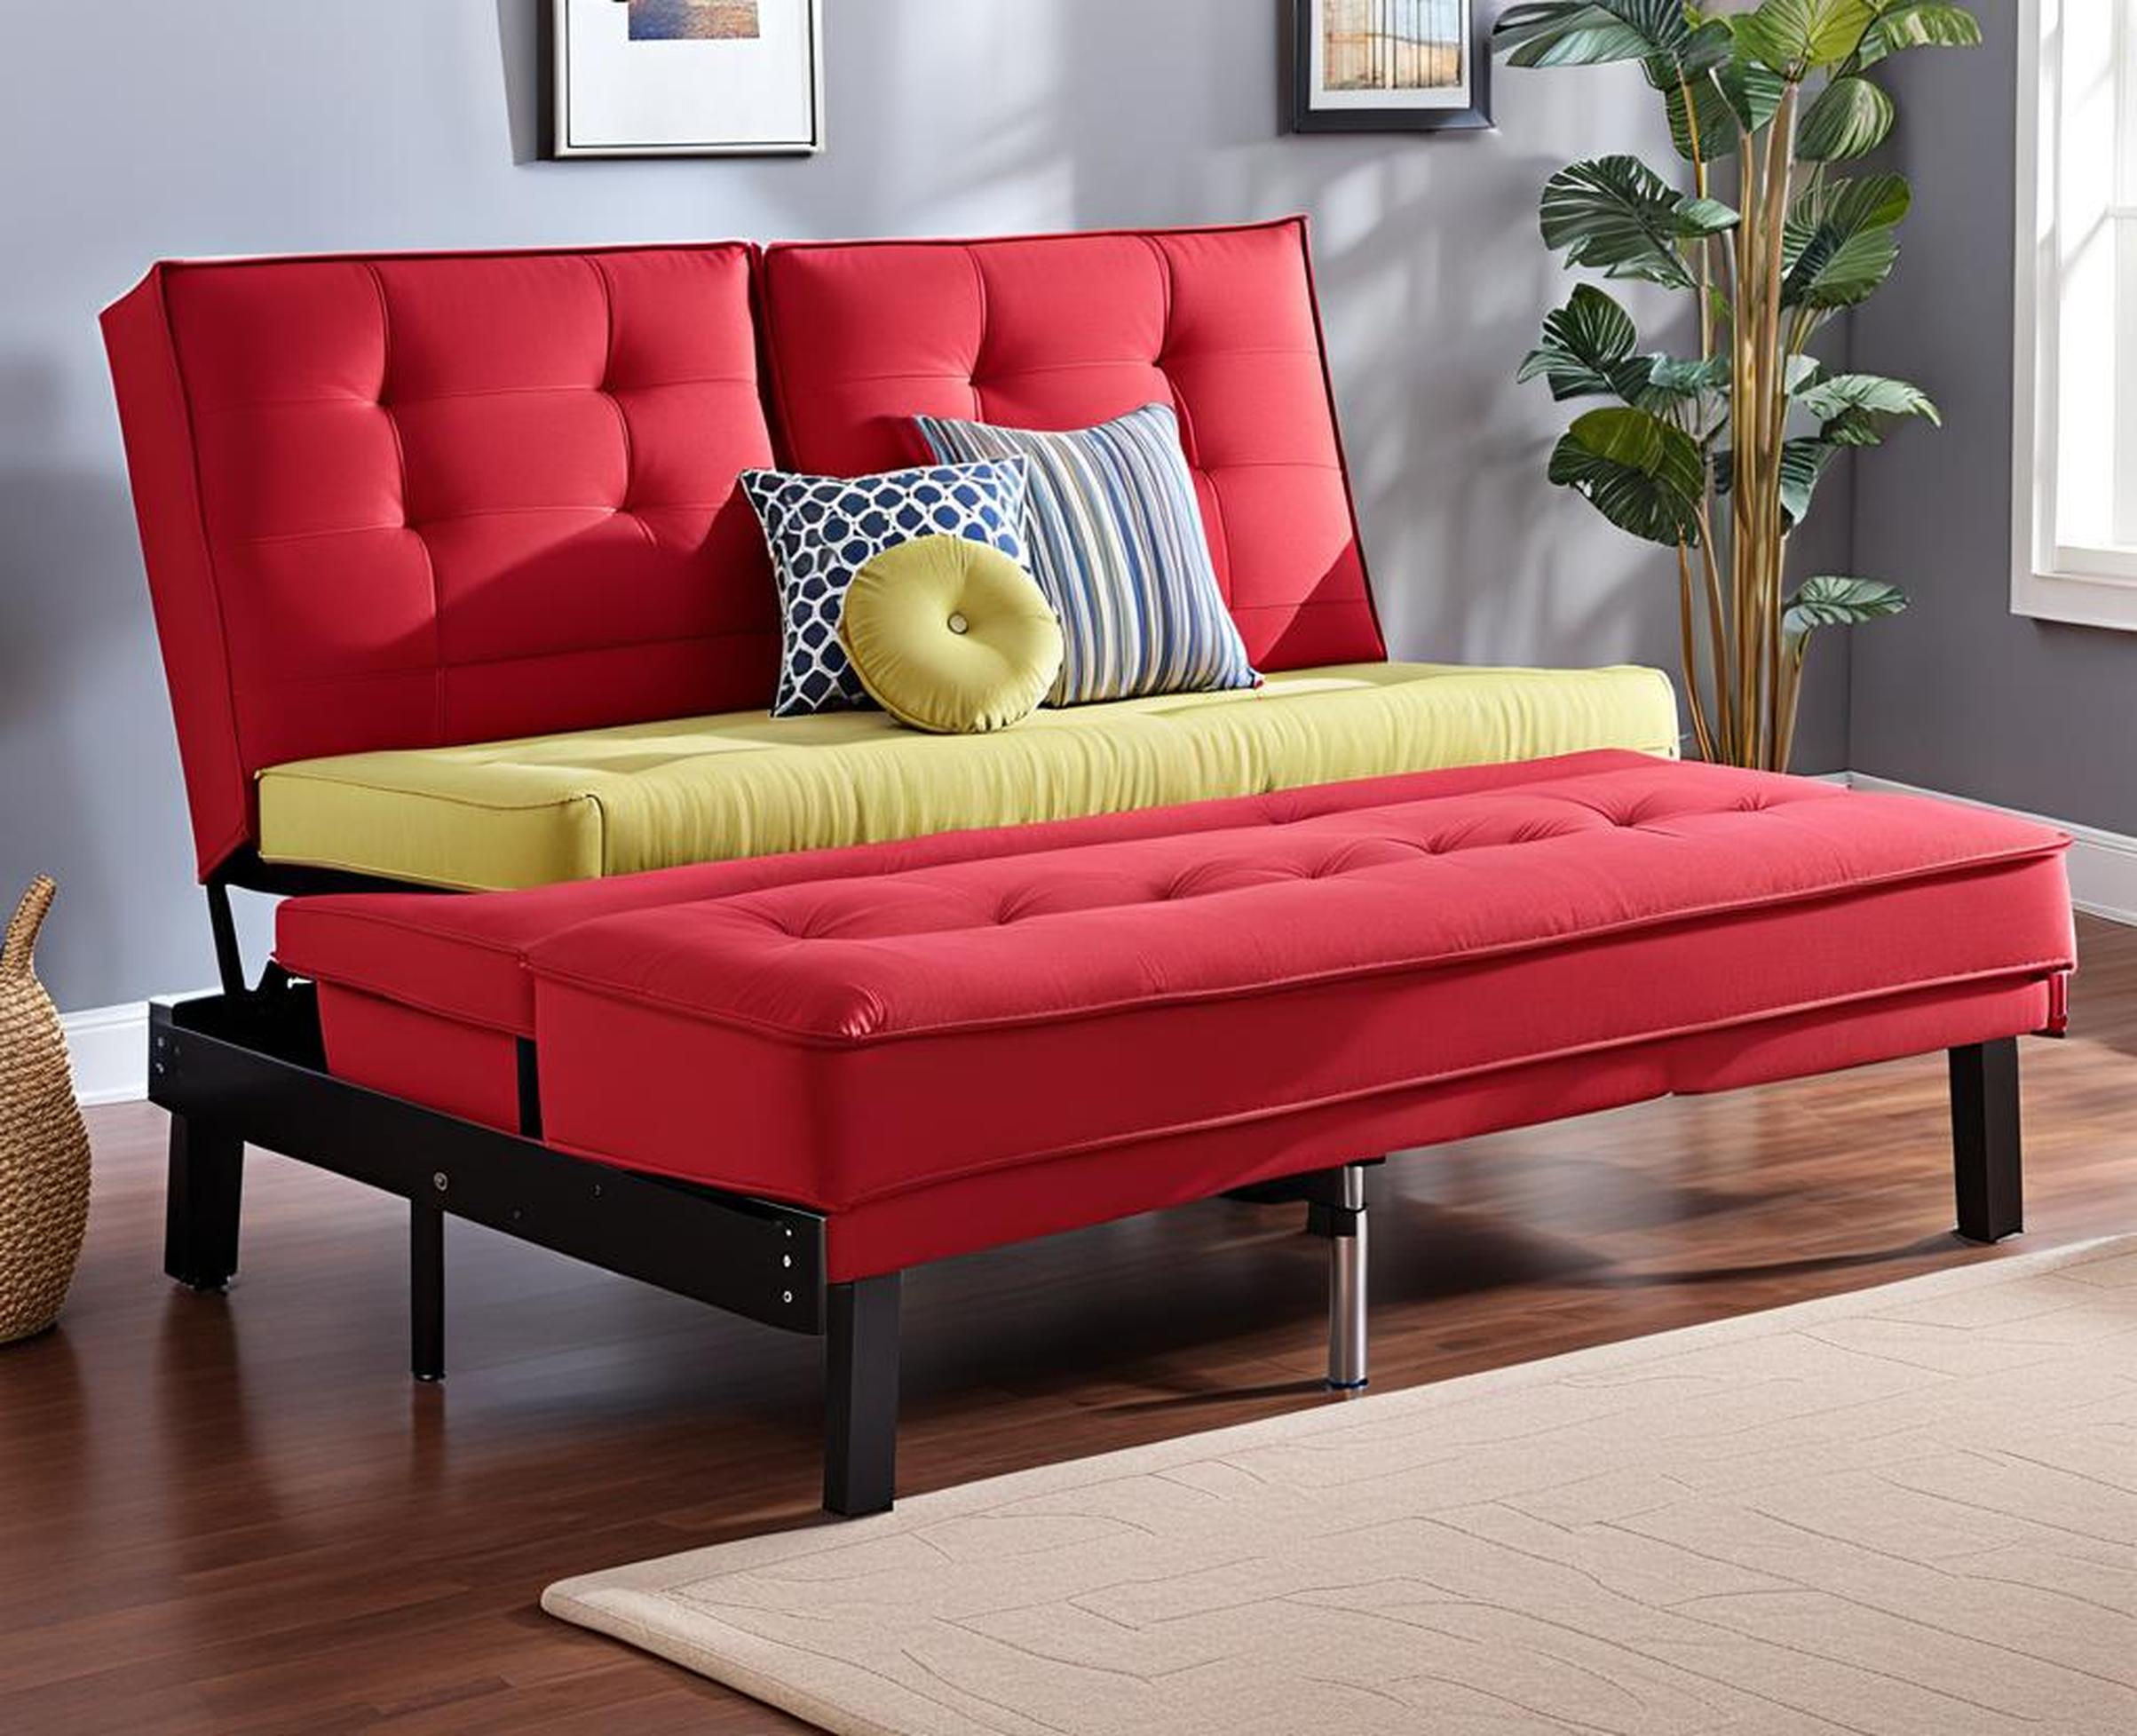 dozer convertible twin sofa bed